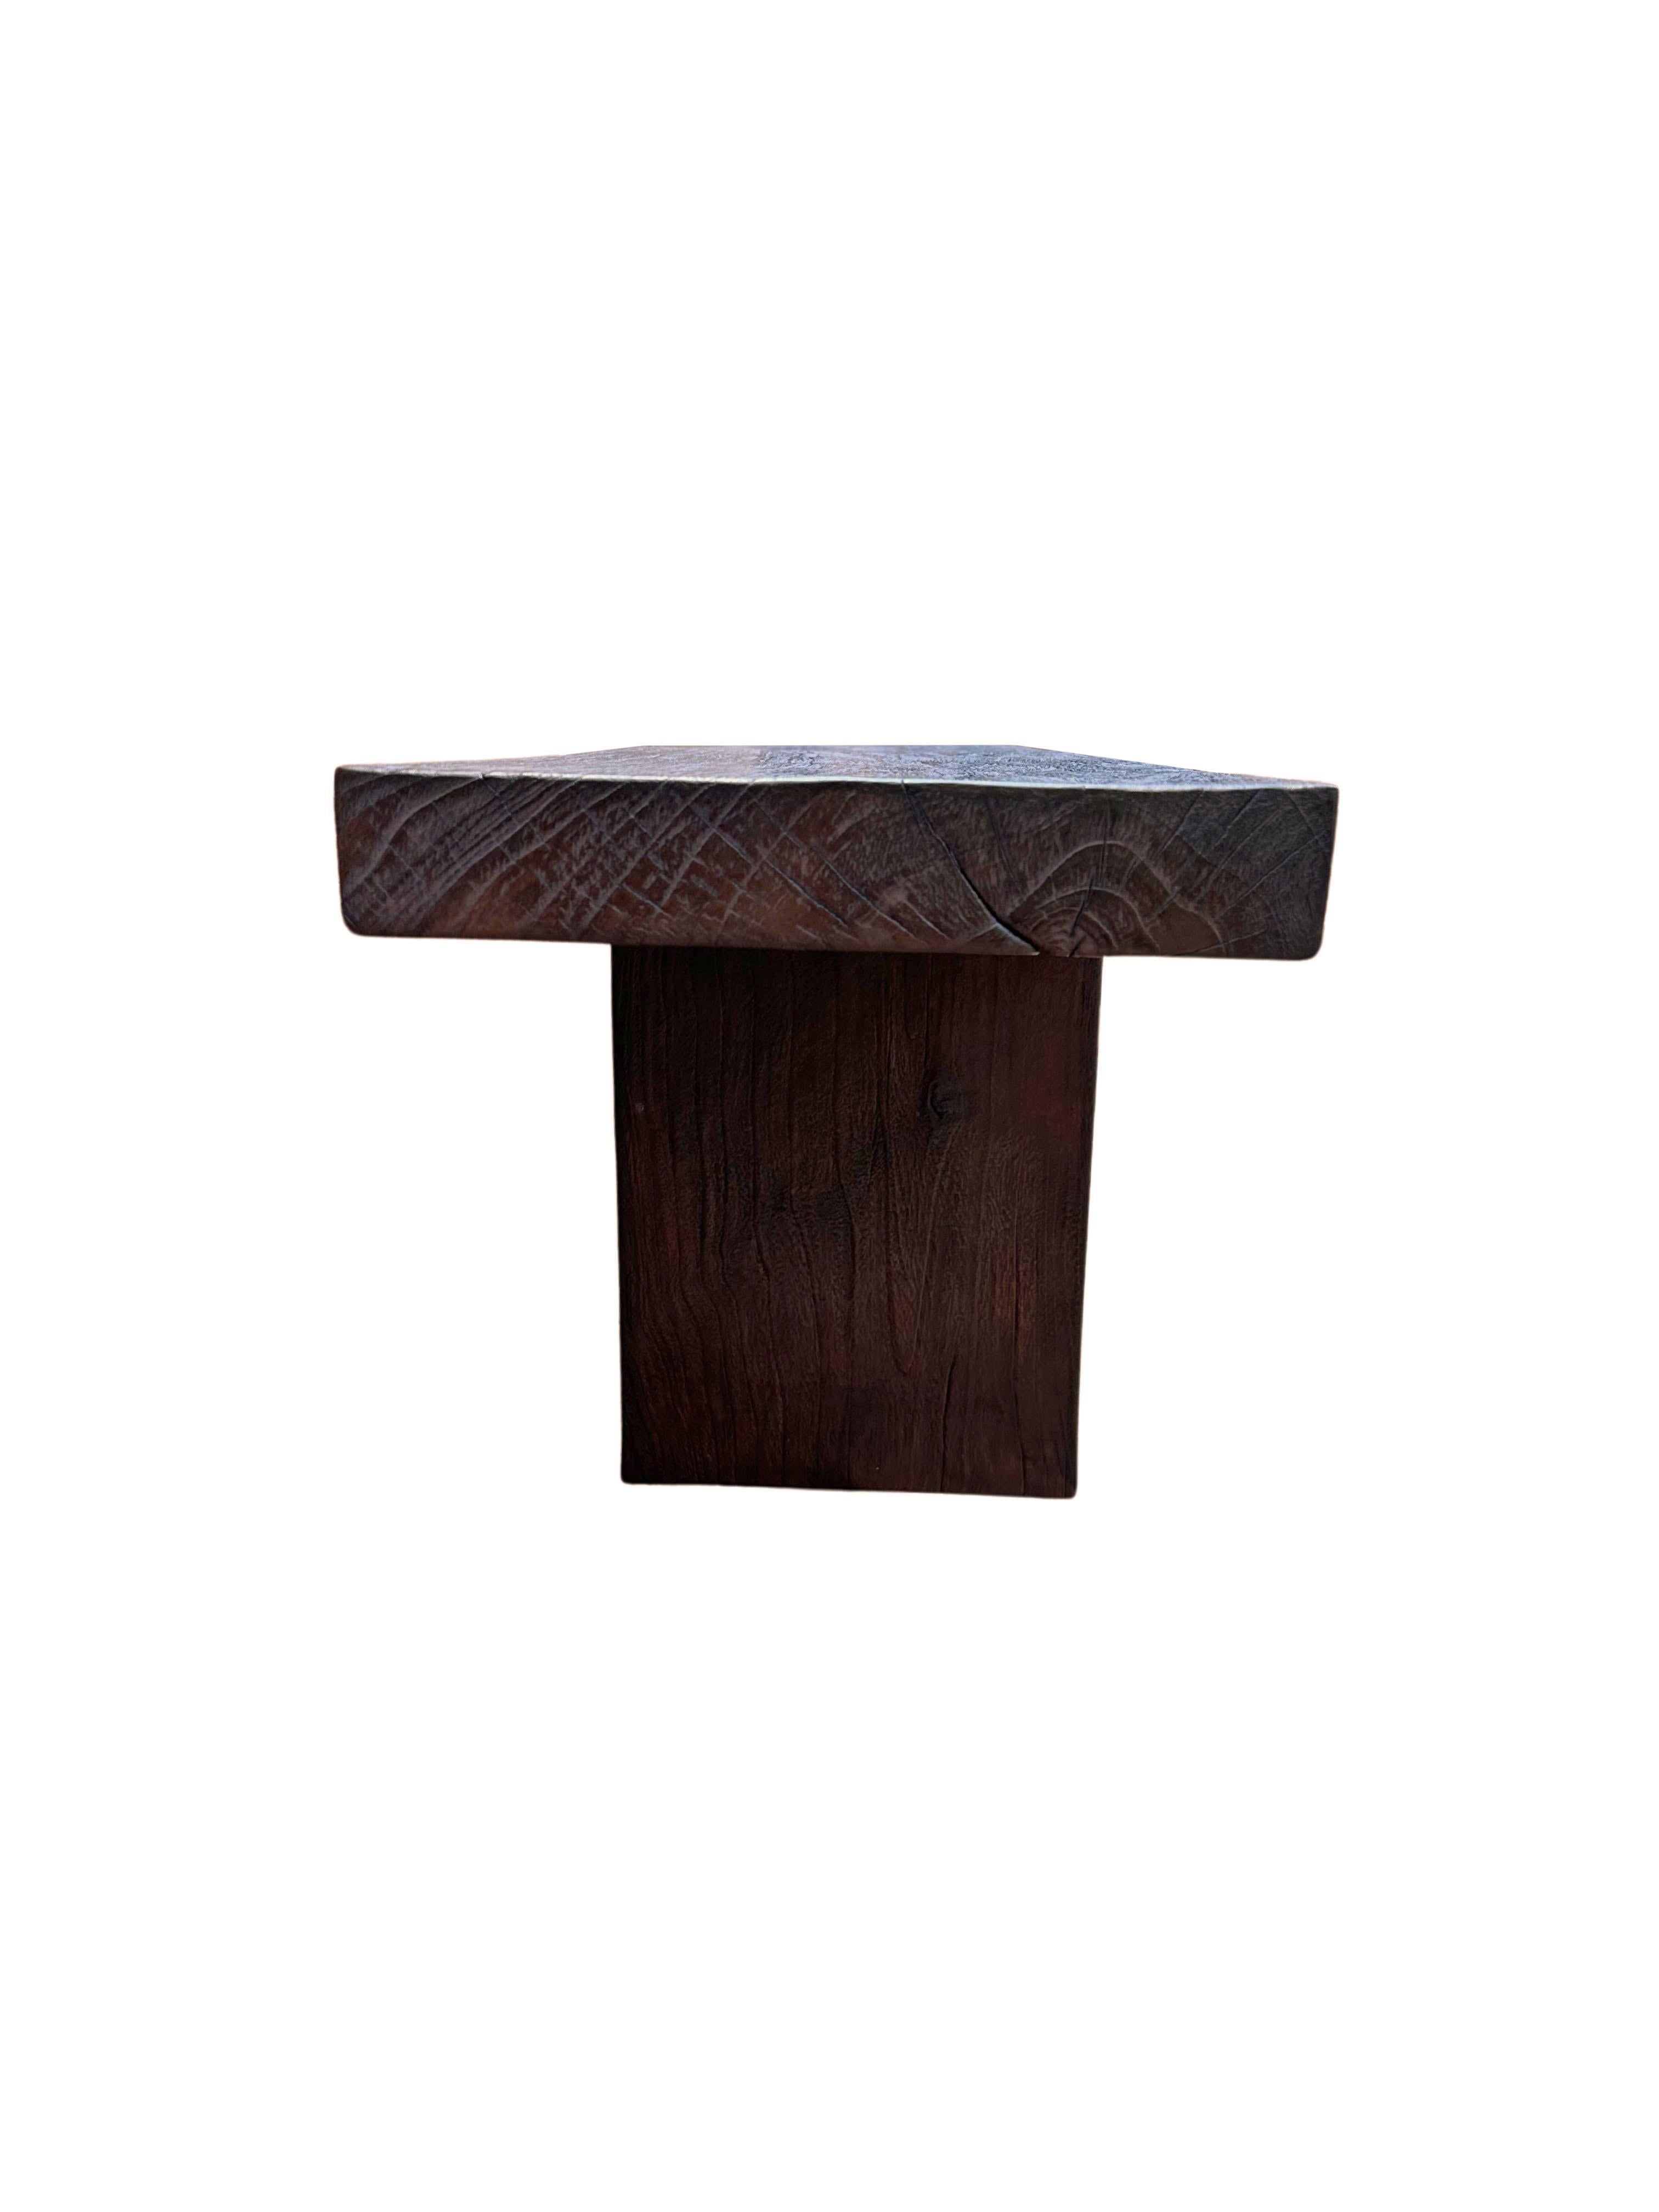 Hand-Carved Sculptural Teak Wood Bench Modern Organic, Stunning Textures, Espresso Finish For Sale